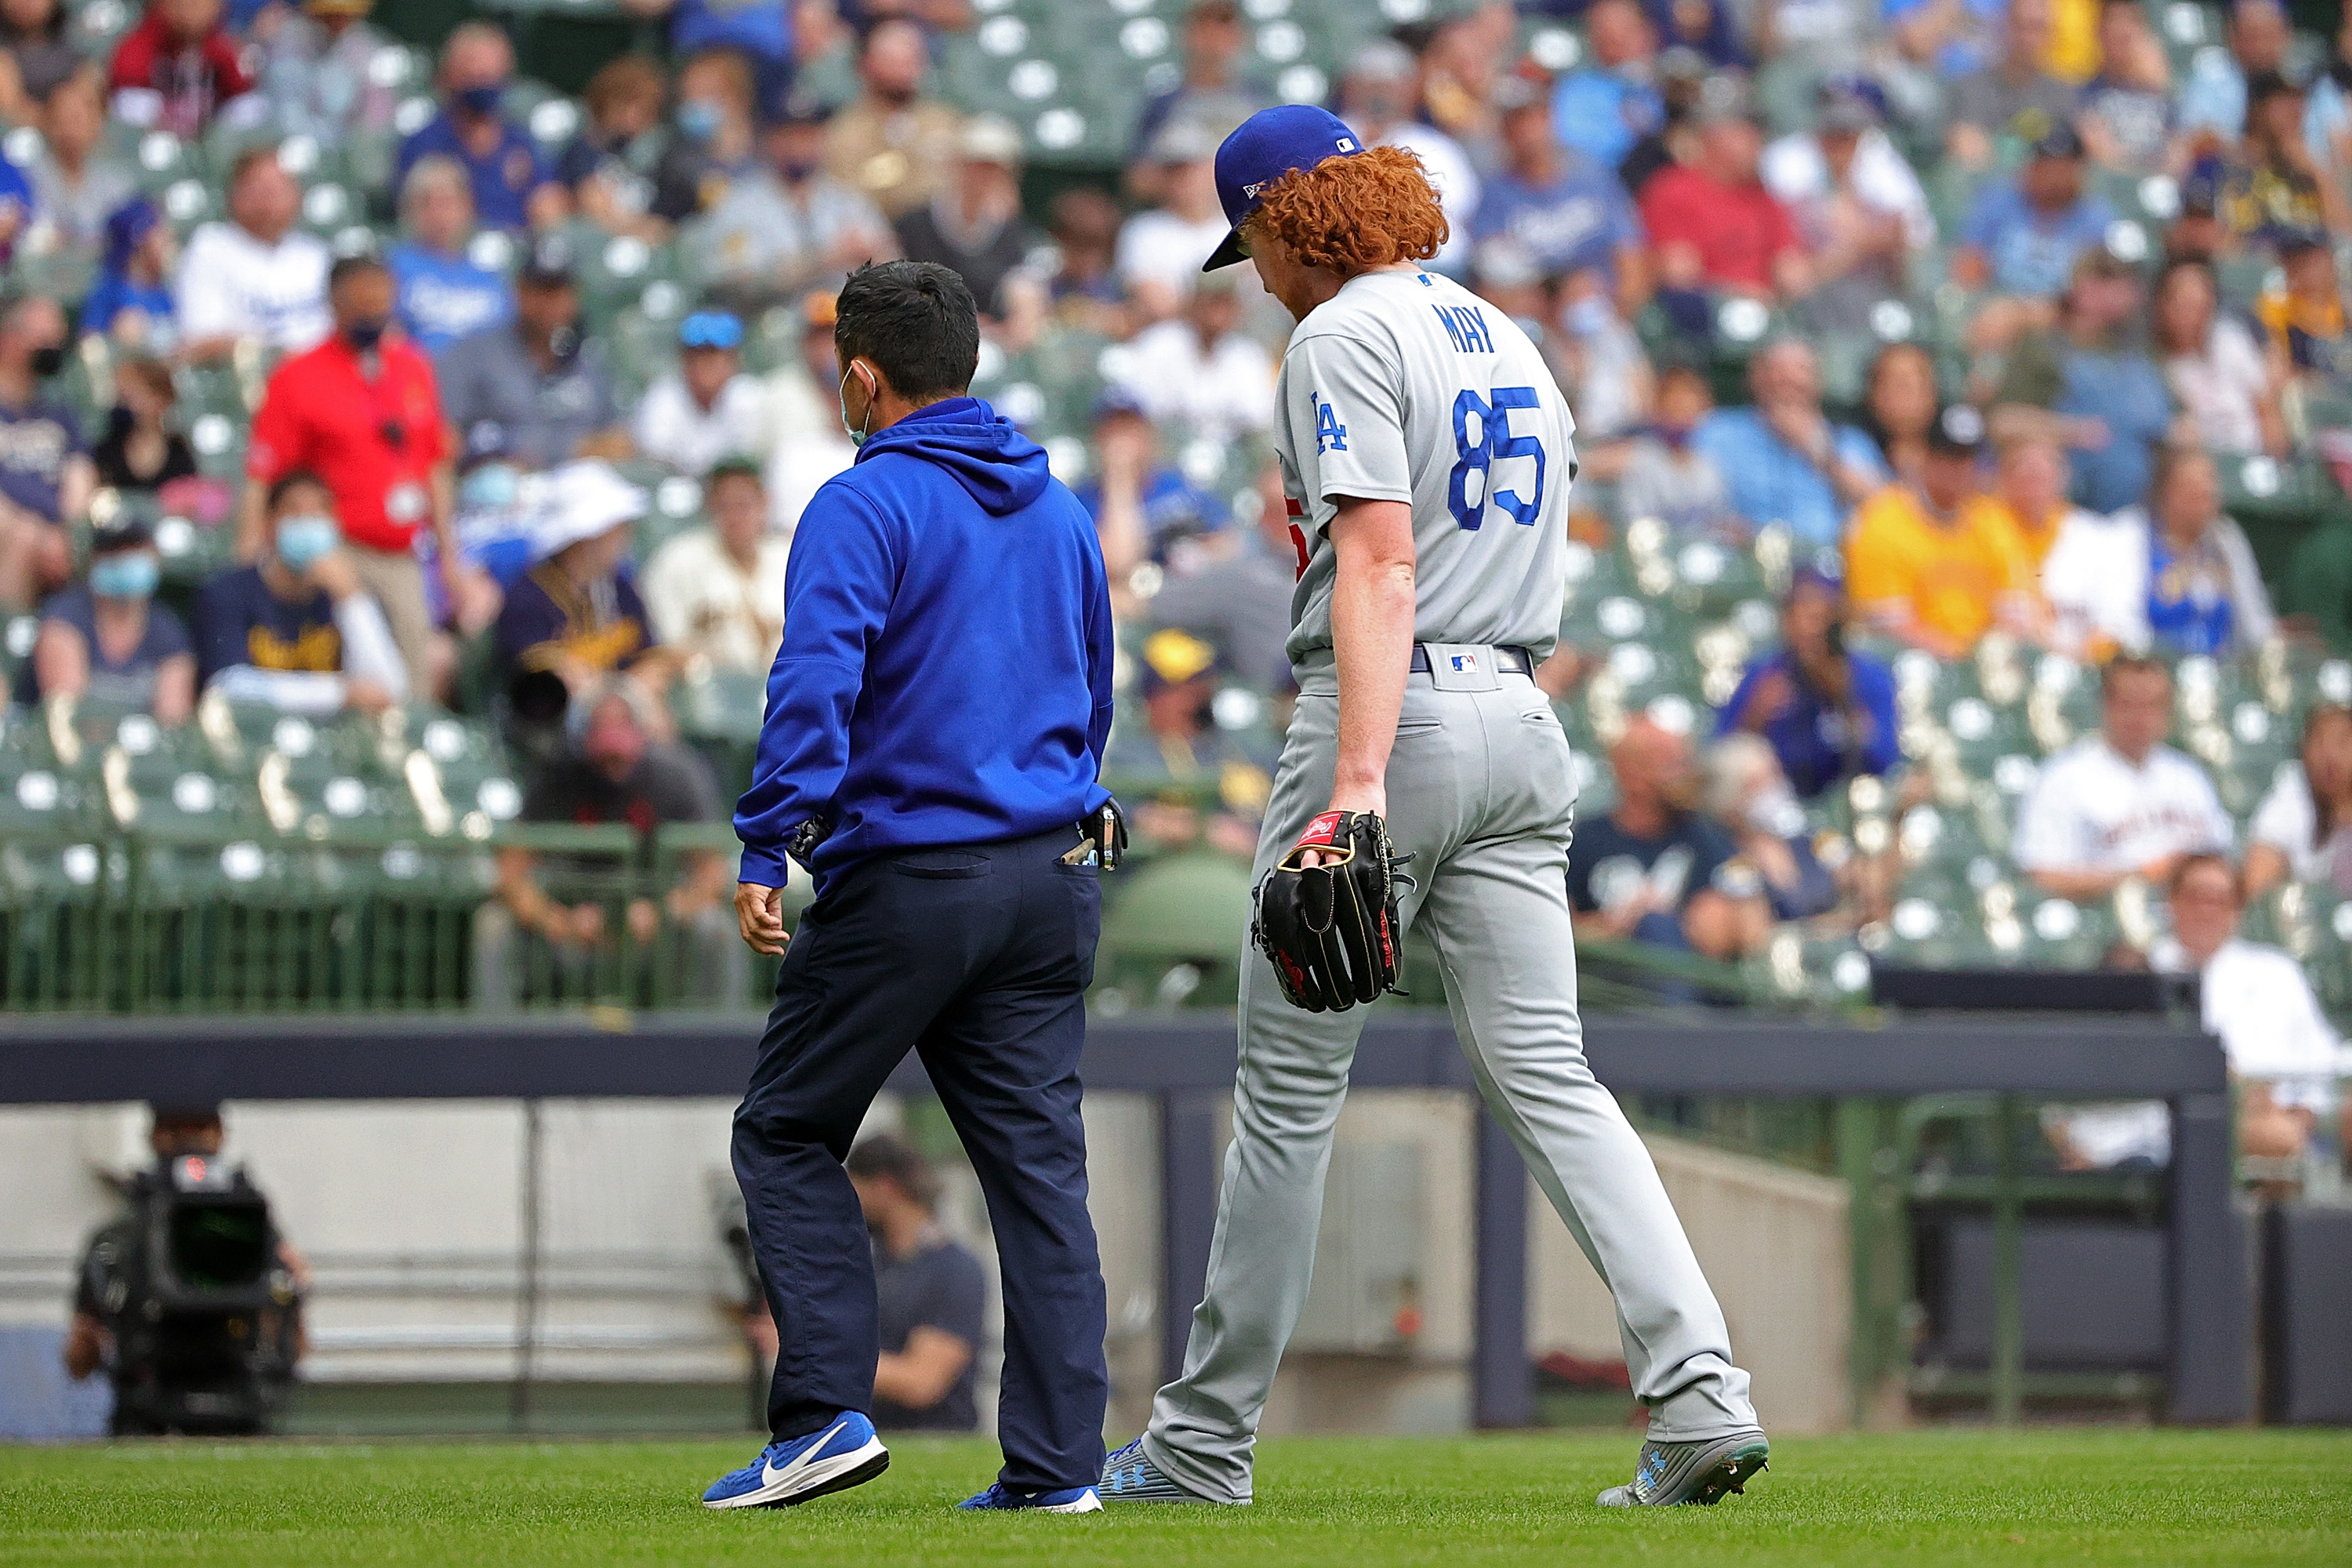 Dodgers pitcher Walker Buehler to undergo season-ending surgery